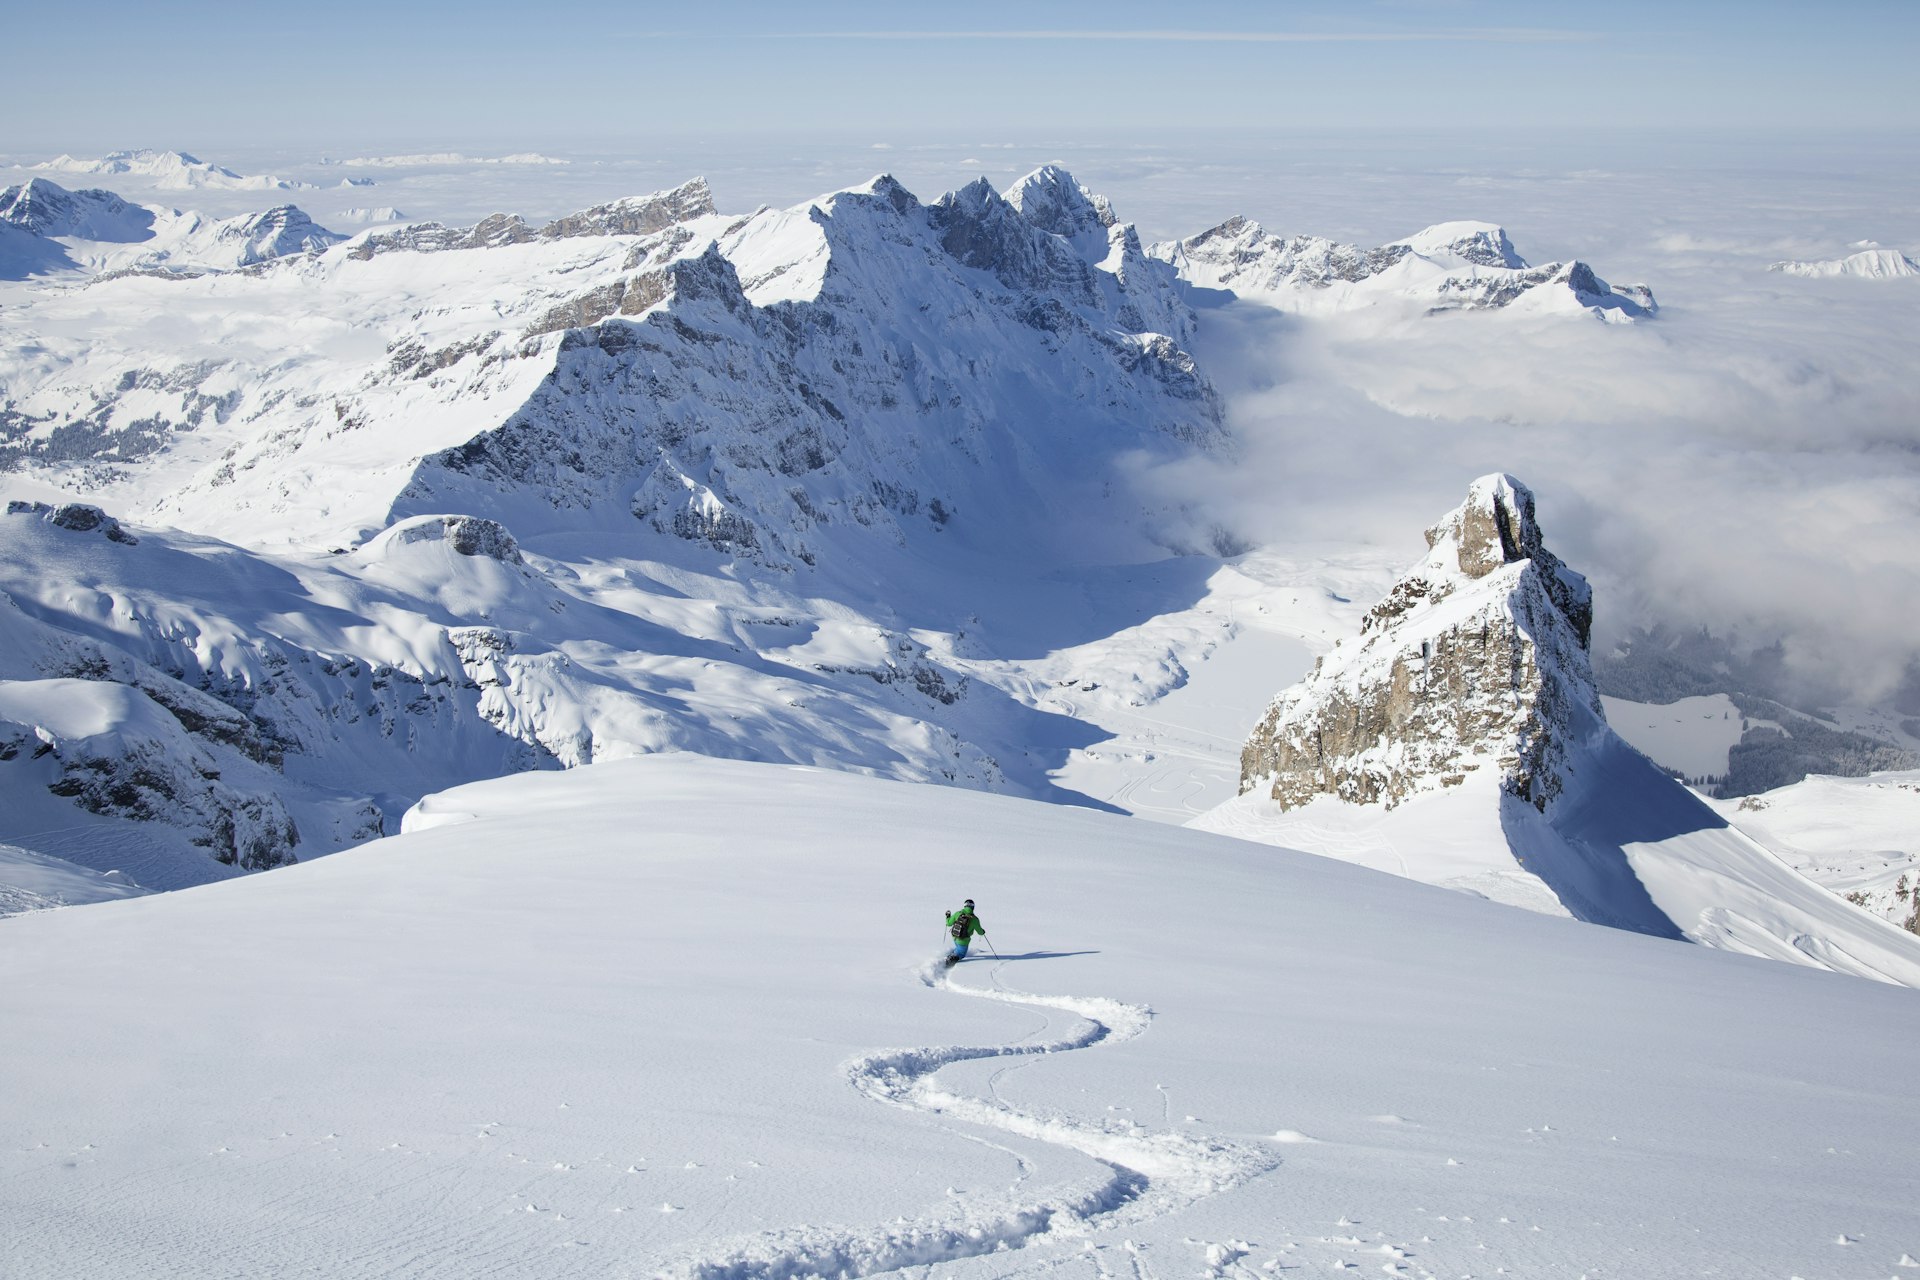 Off-piste skier heads off towards a mountain summit in powder snow